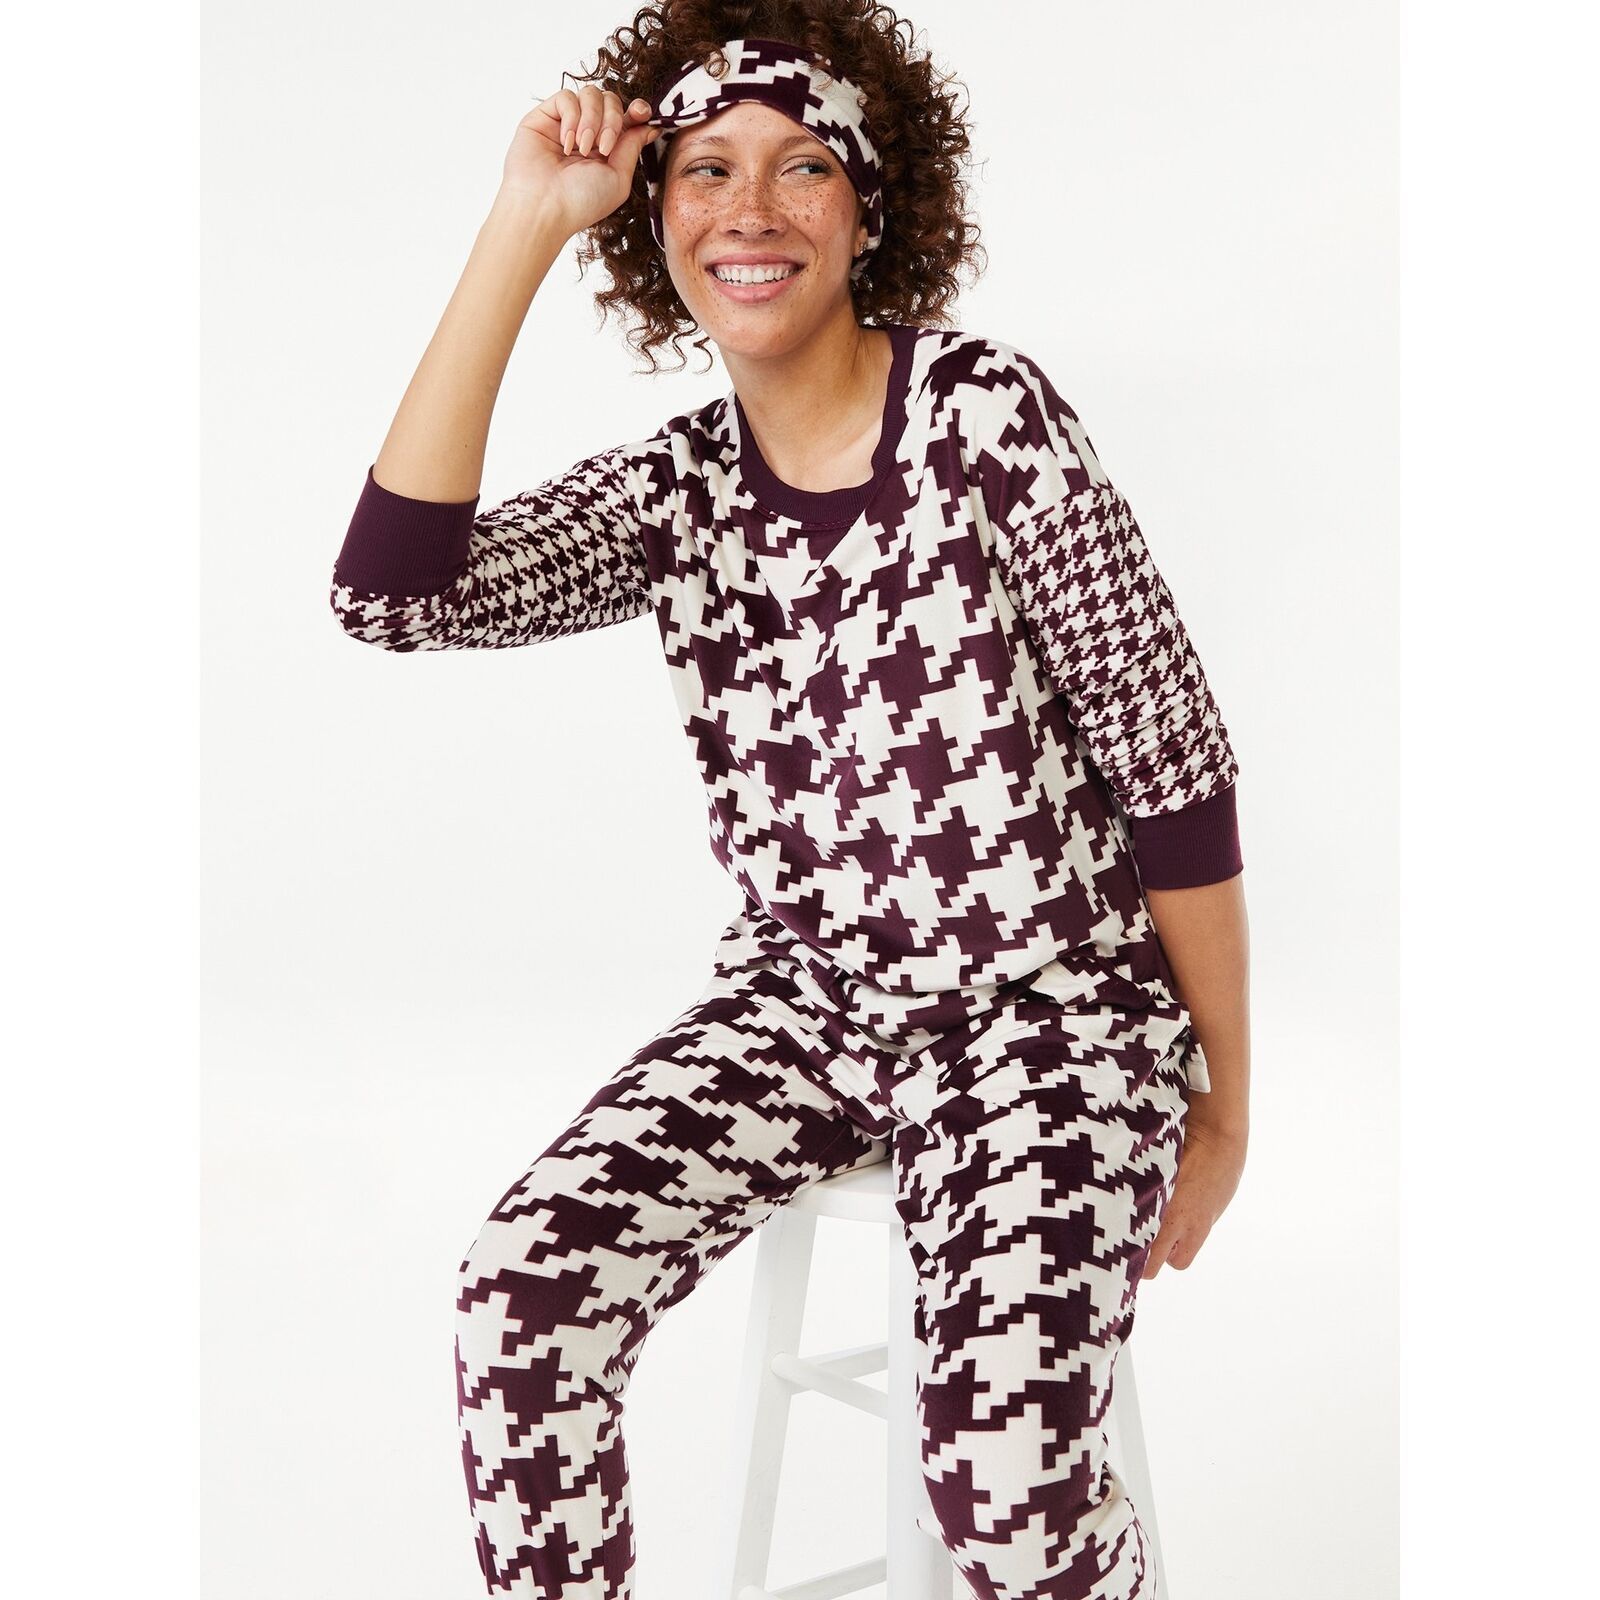 Joyspun Women's Long Sleeve Flannel Sleep Top and Pants Pajama Set